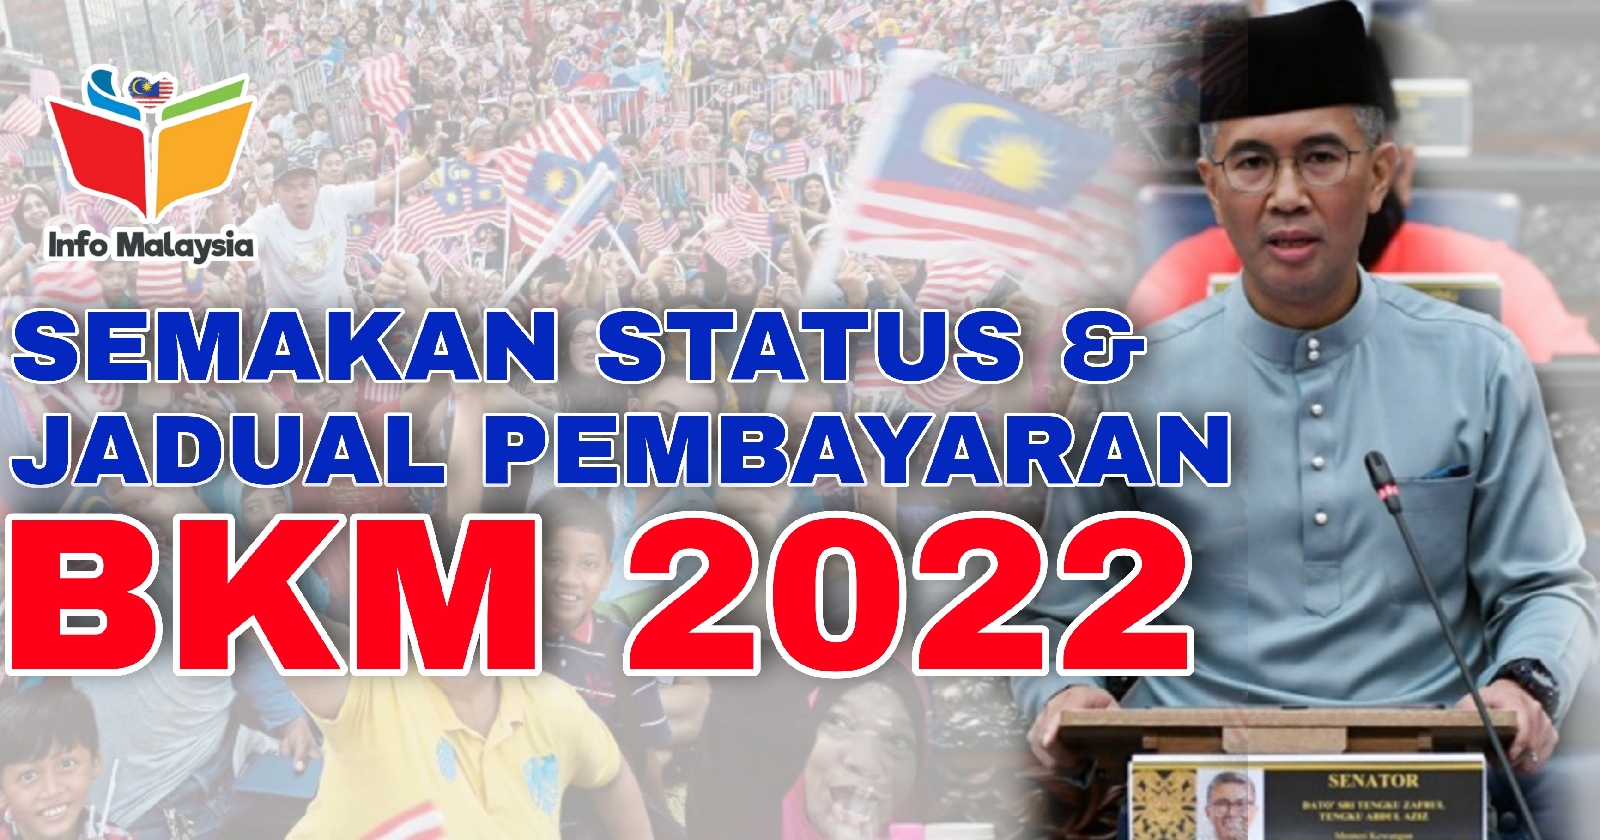 Semak status bkm 2022 online